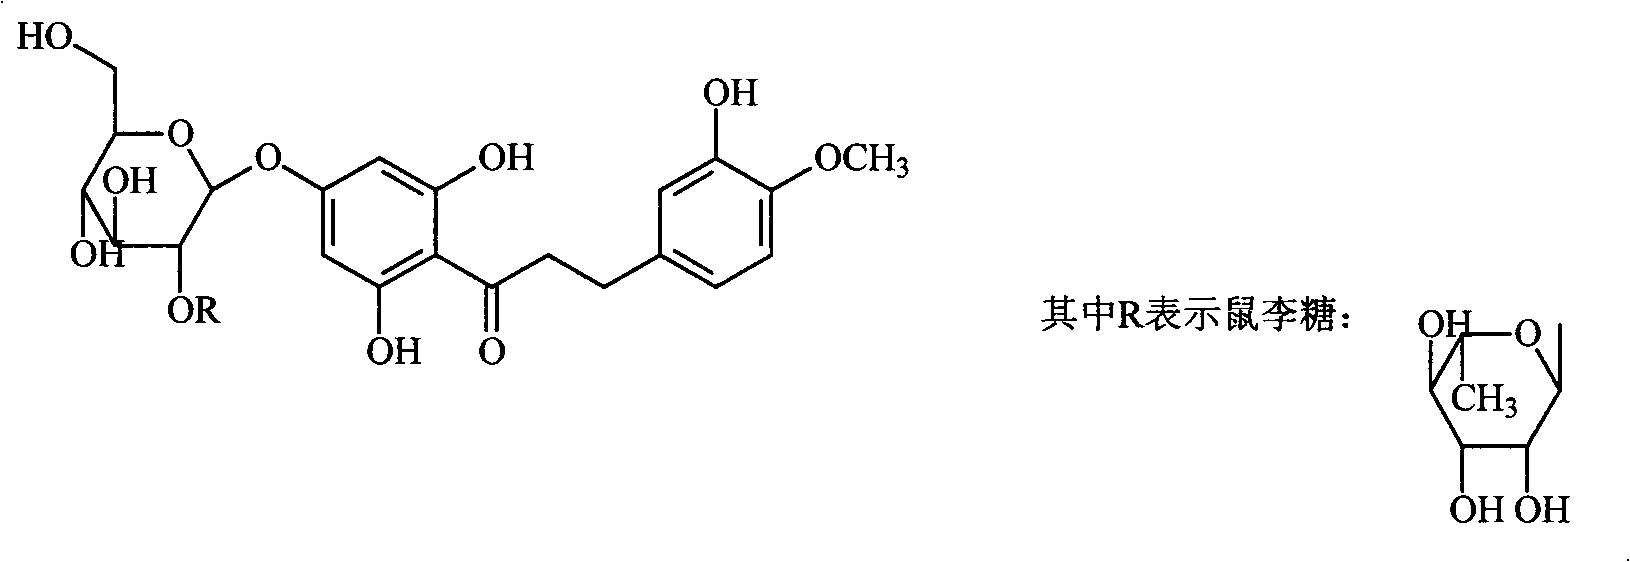 Preparation method of neohesperidin dihydrochalcone